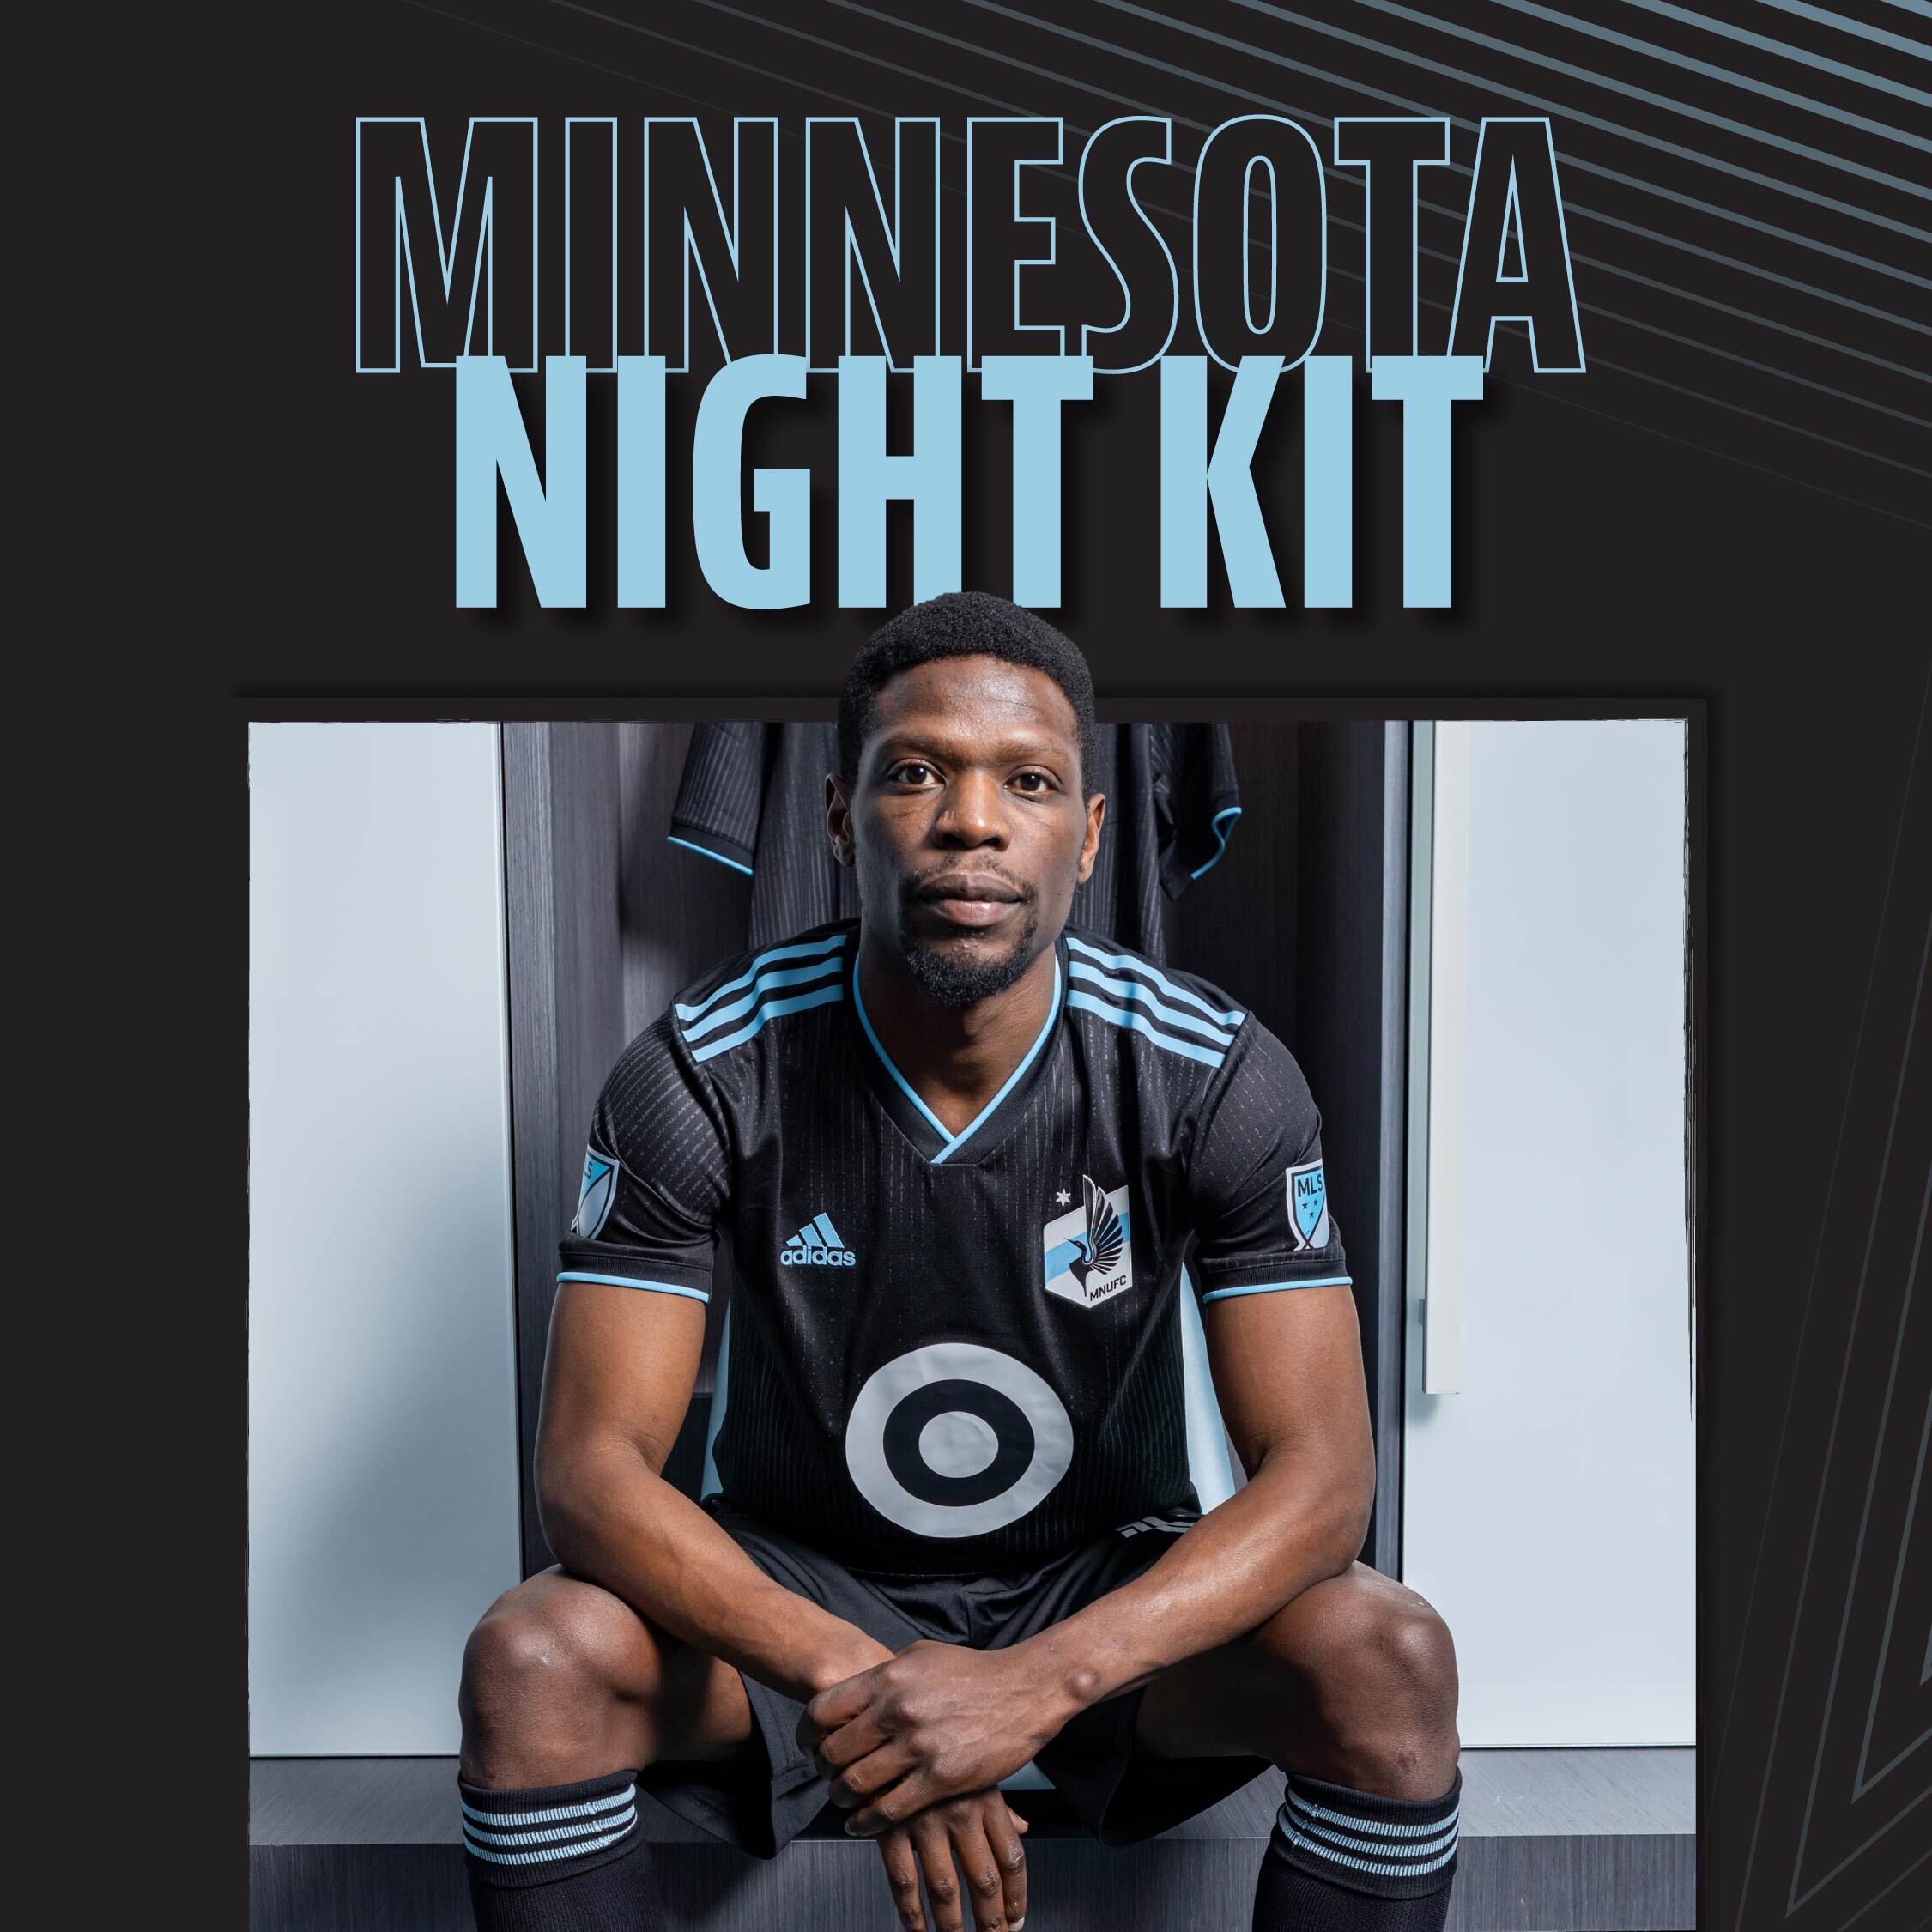 Minnesota United Presento su nueva camiseta ‘Minnesota Night Kit’ de la temporada 2022